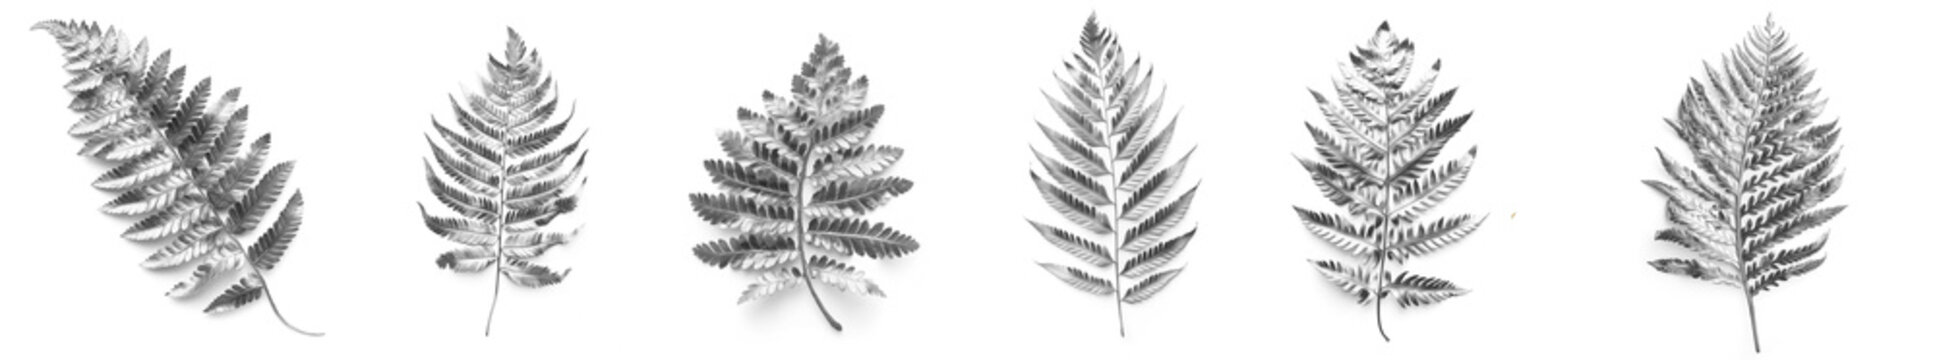 Set of silver fern leaves